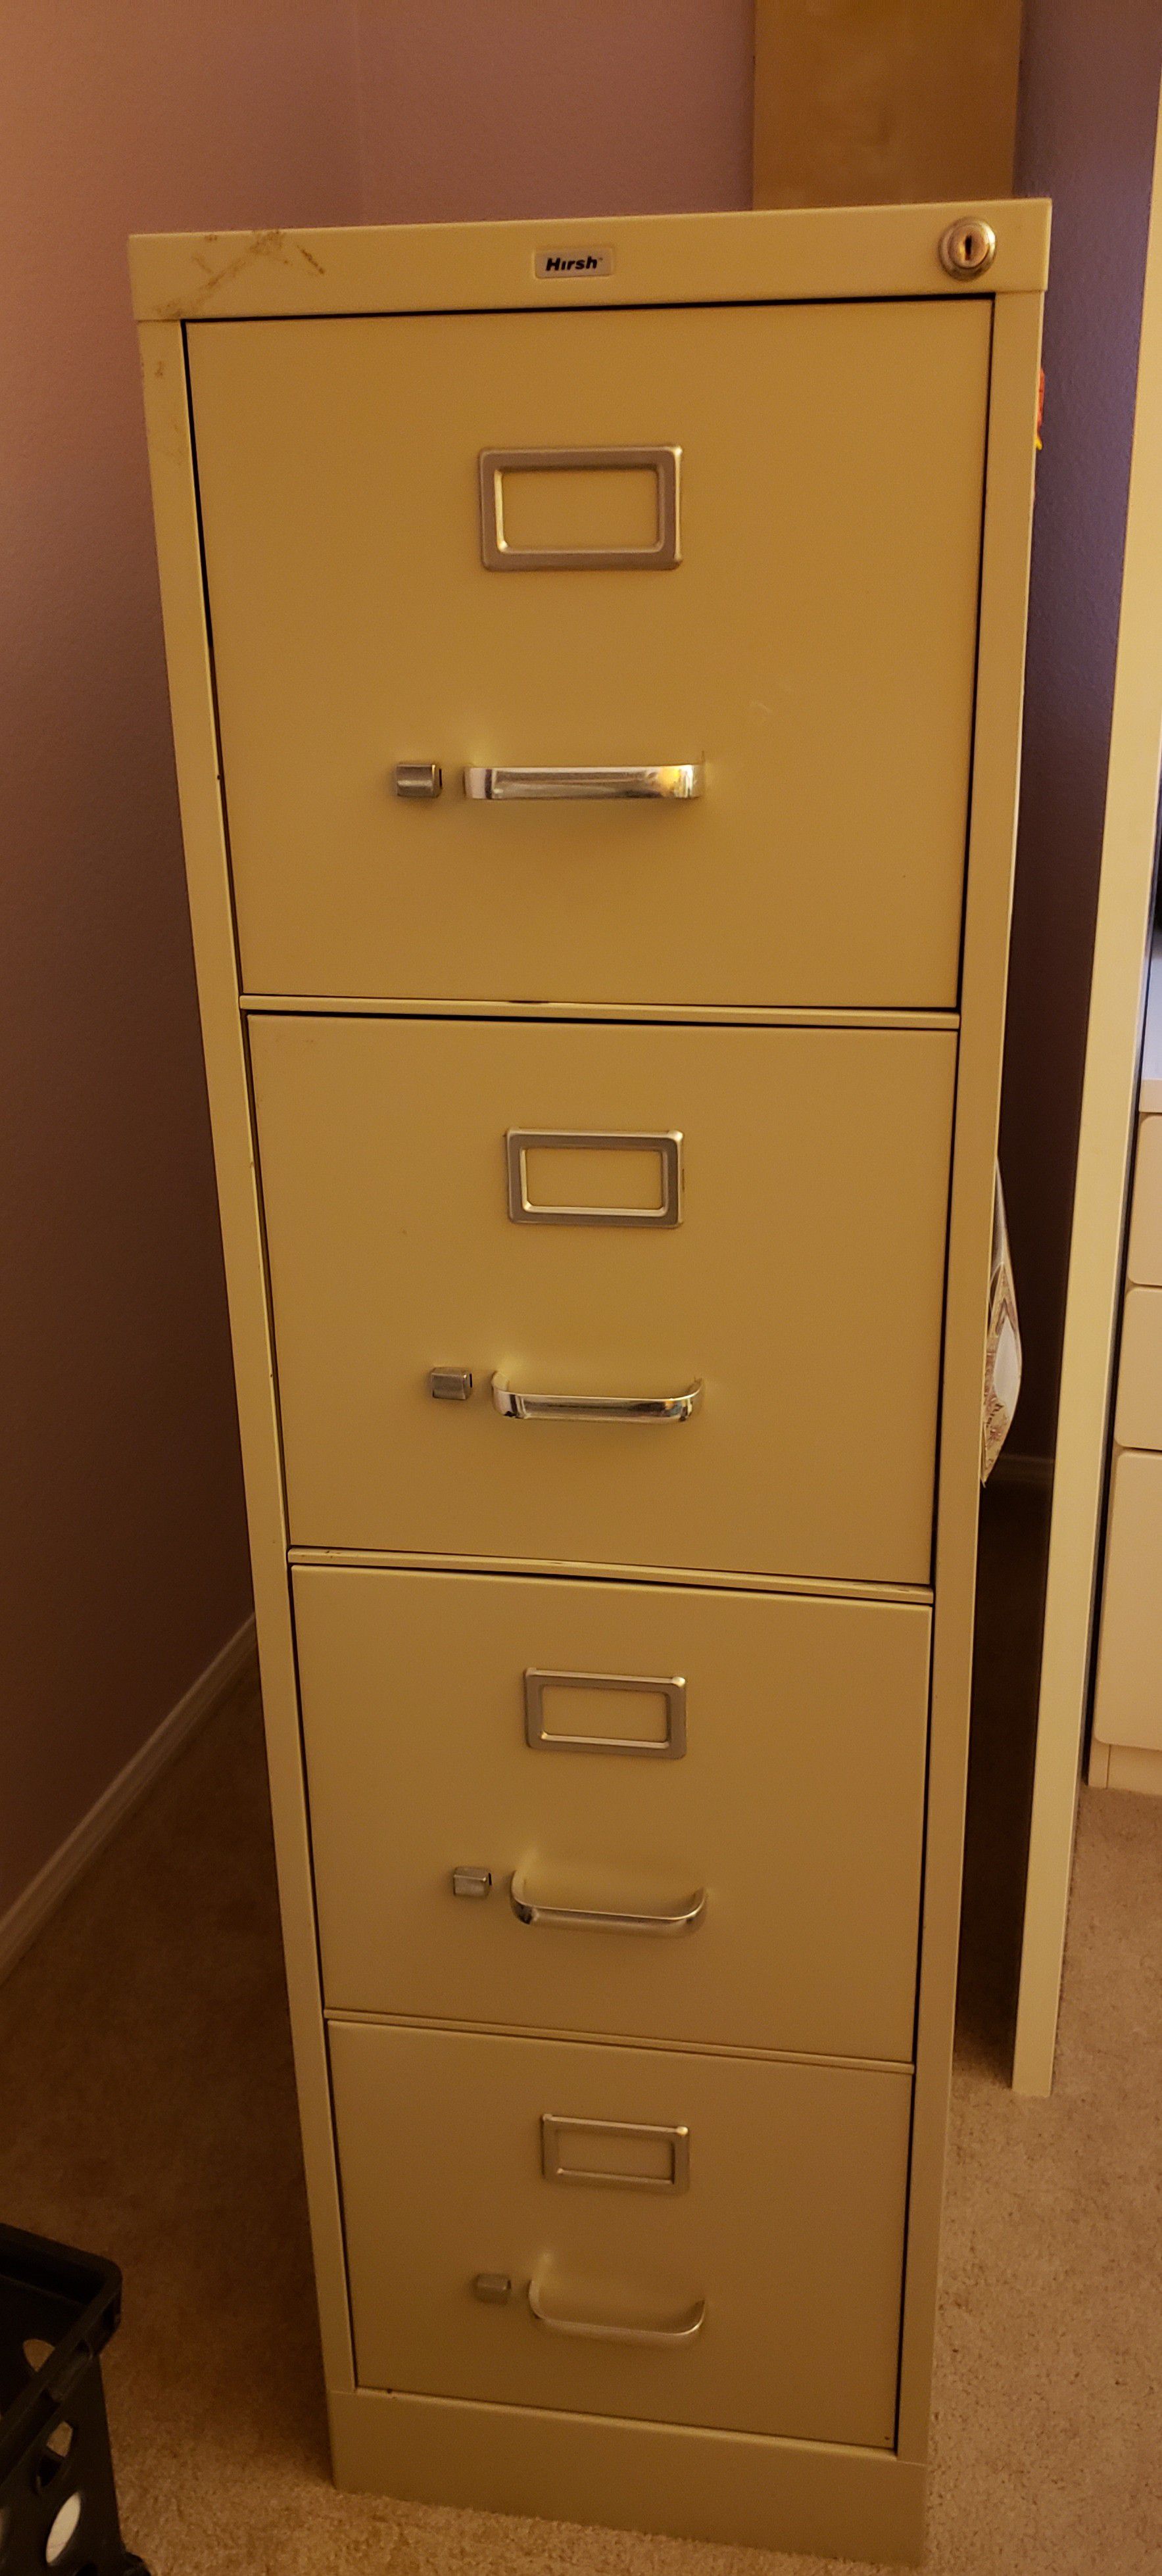 4 drawer filing cabinet by Hirsh.